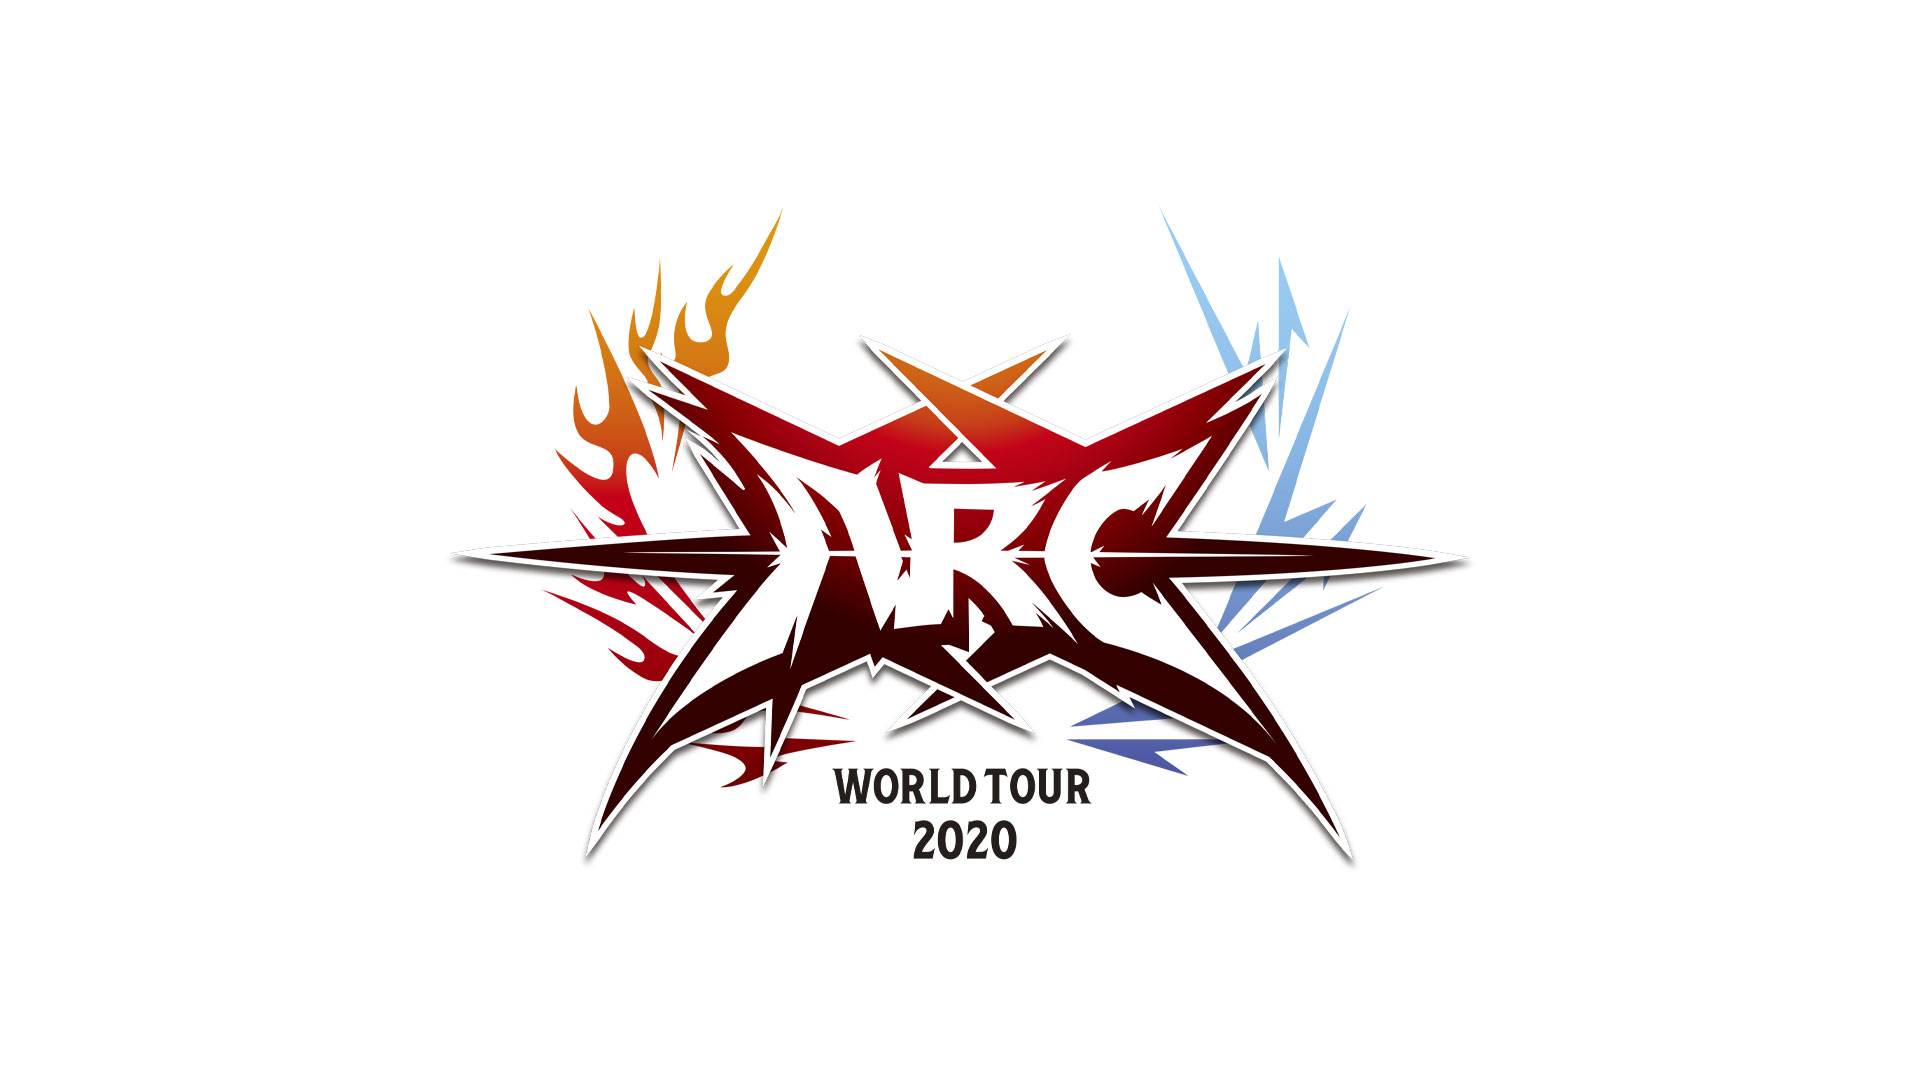 PSA Regarding Arc World Tour 2020 Stop Brussels Challenge